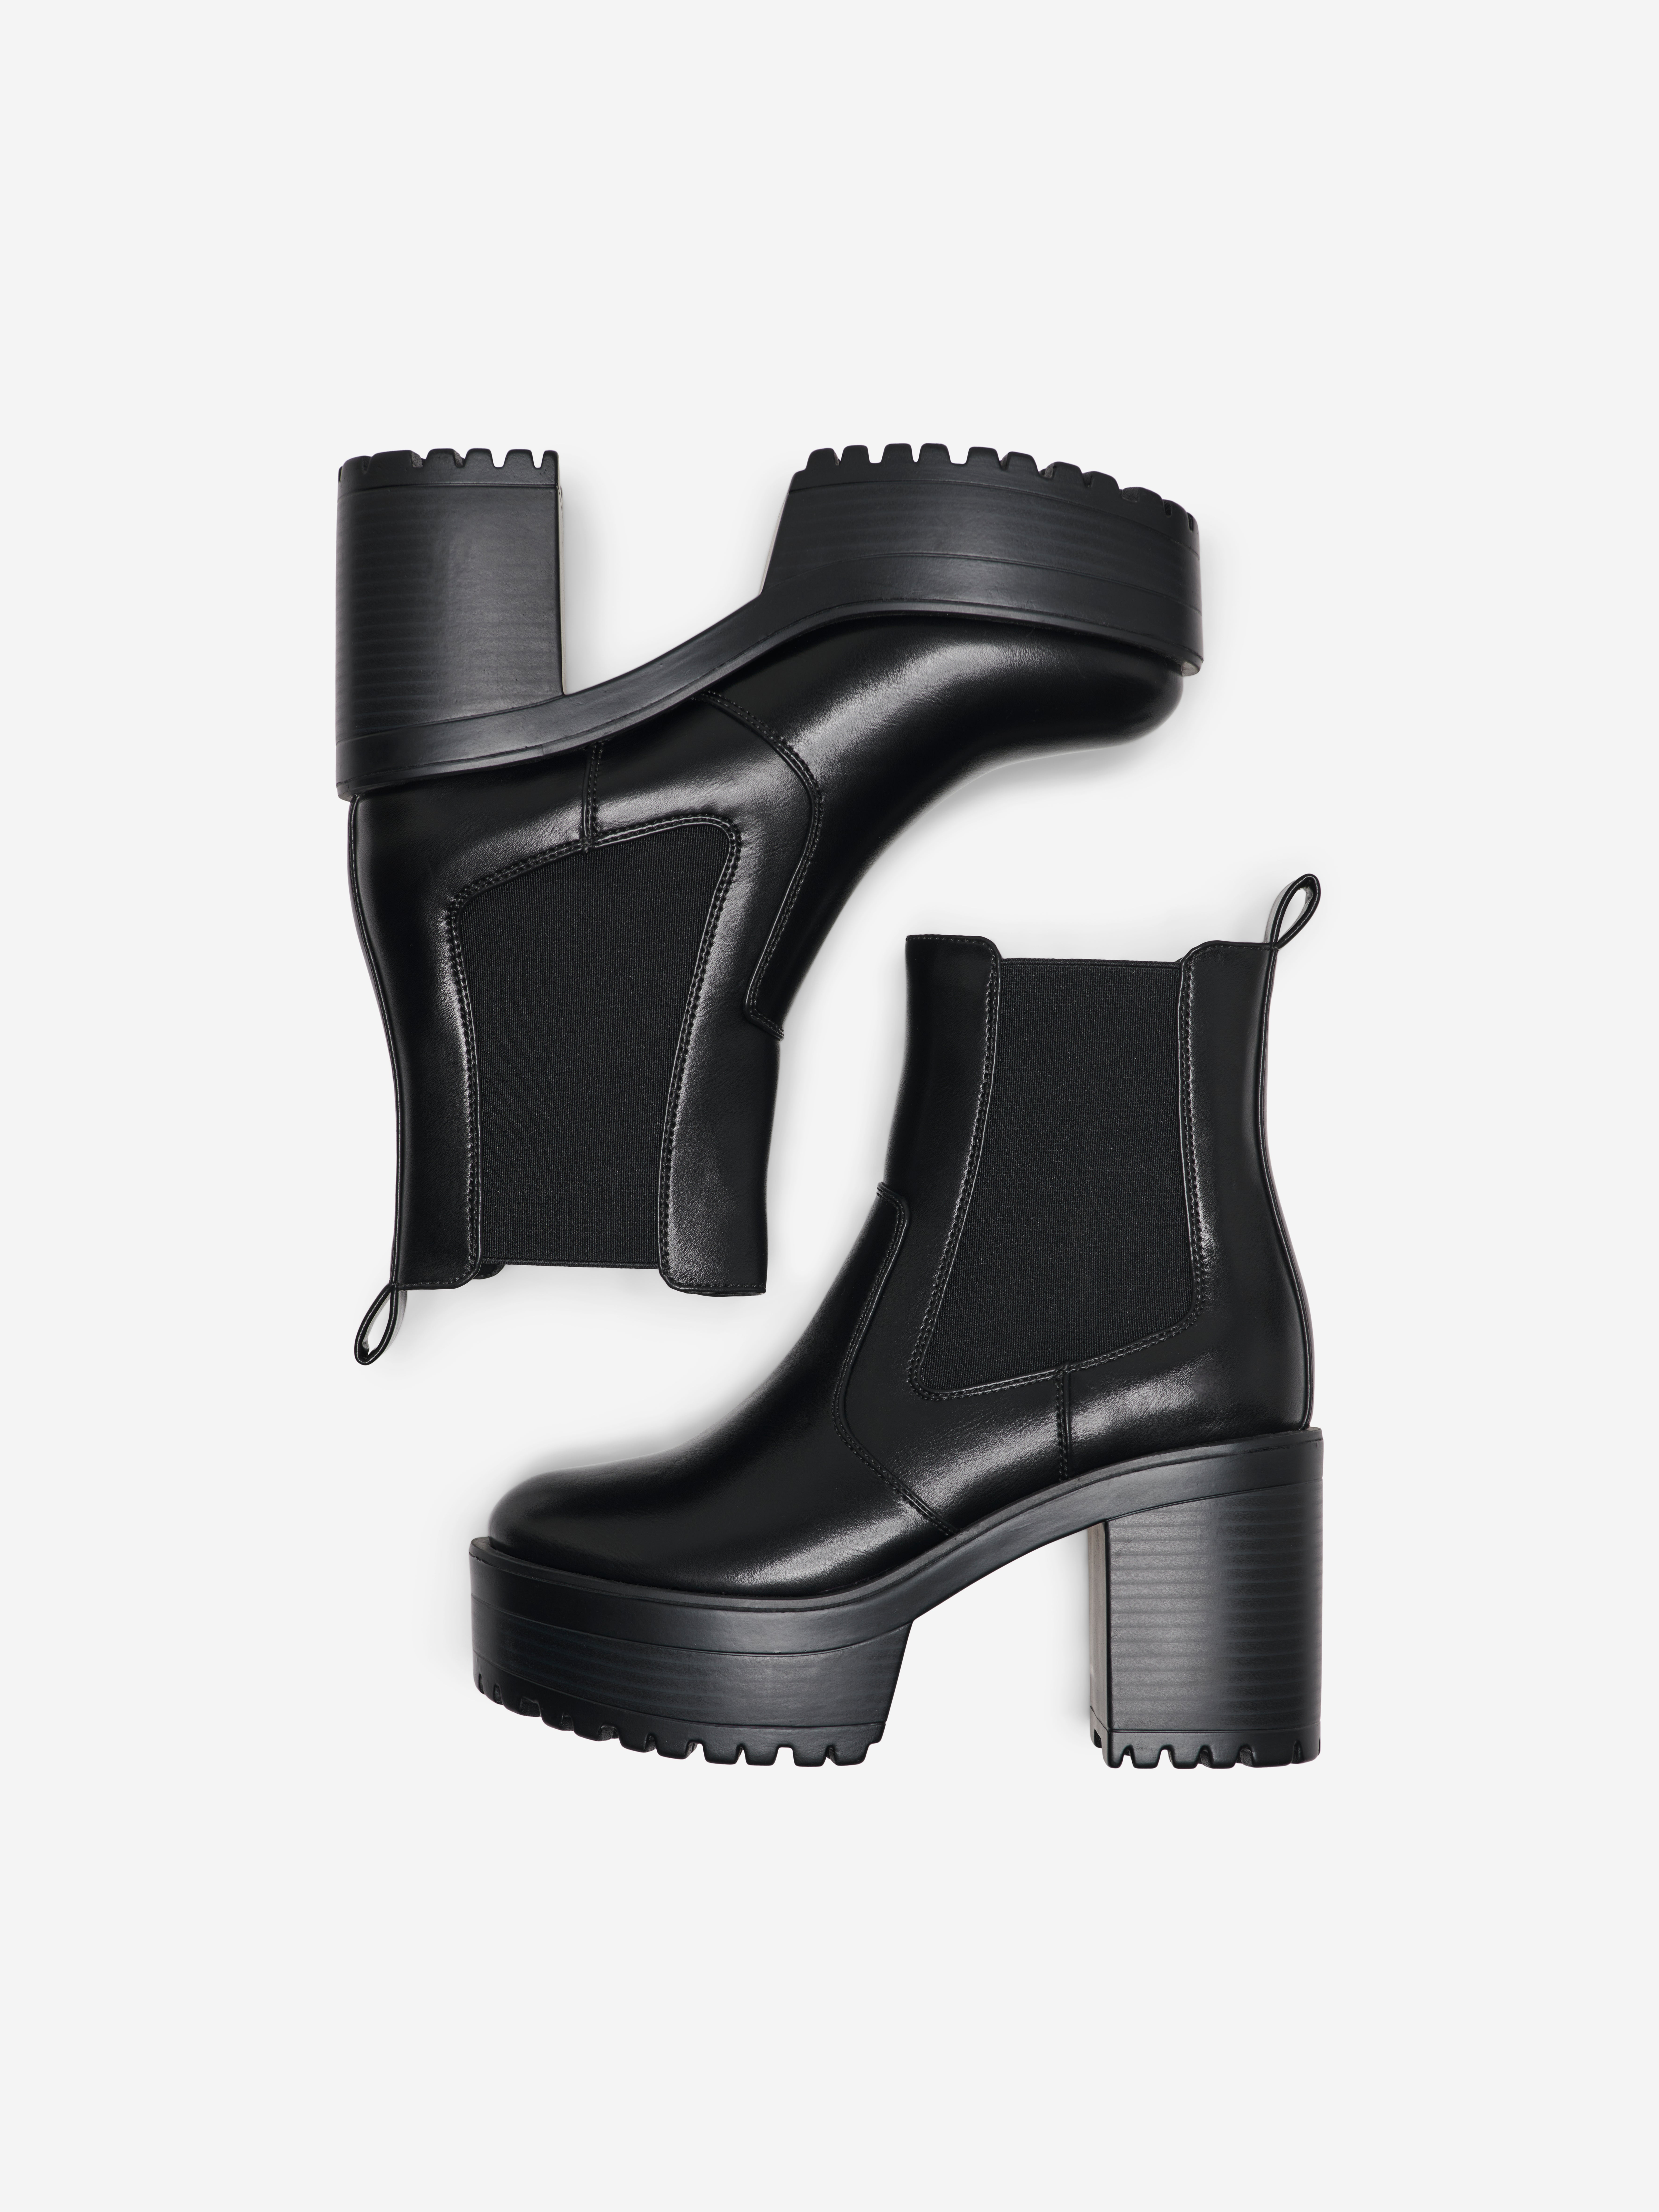 Ladies New Look Grey Suede Heeled Open Toe Summer Boots Size 5 | eBay